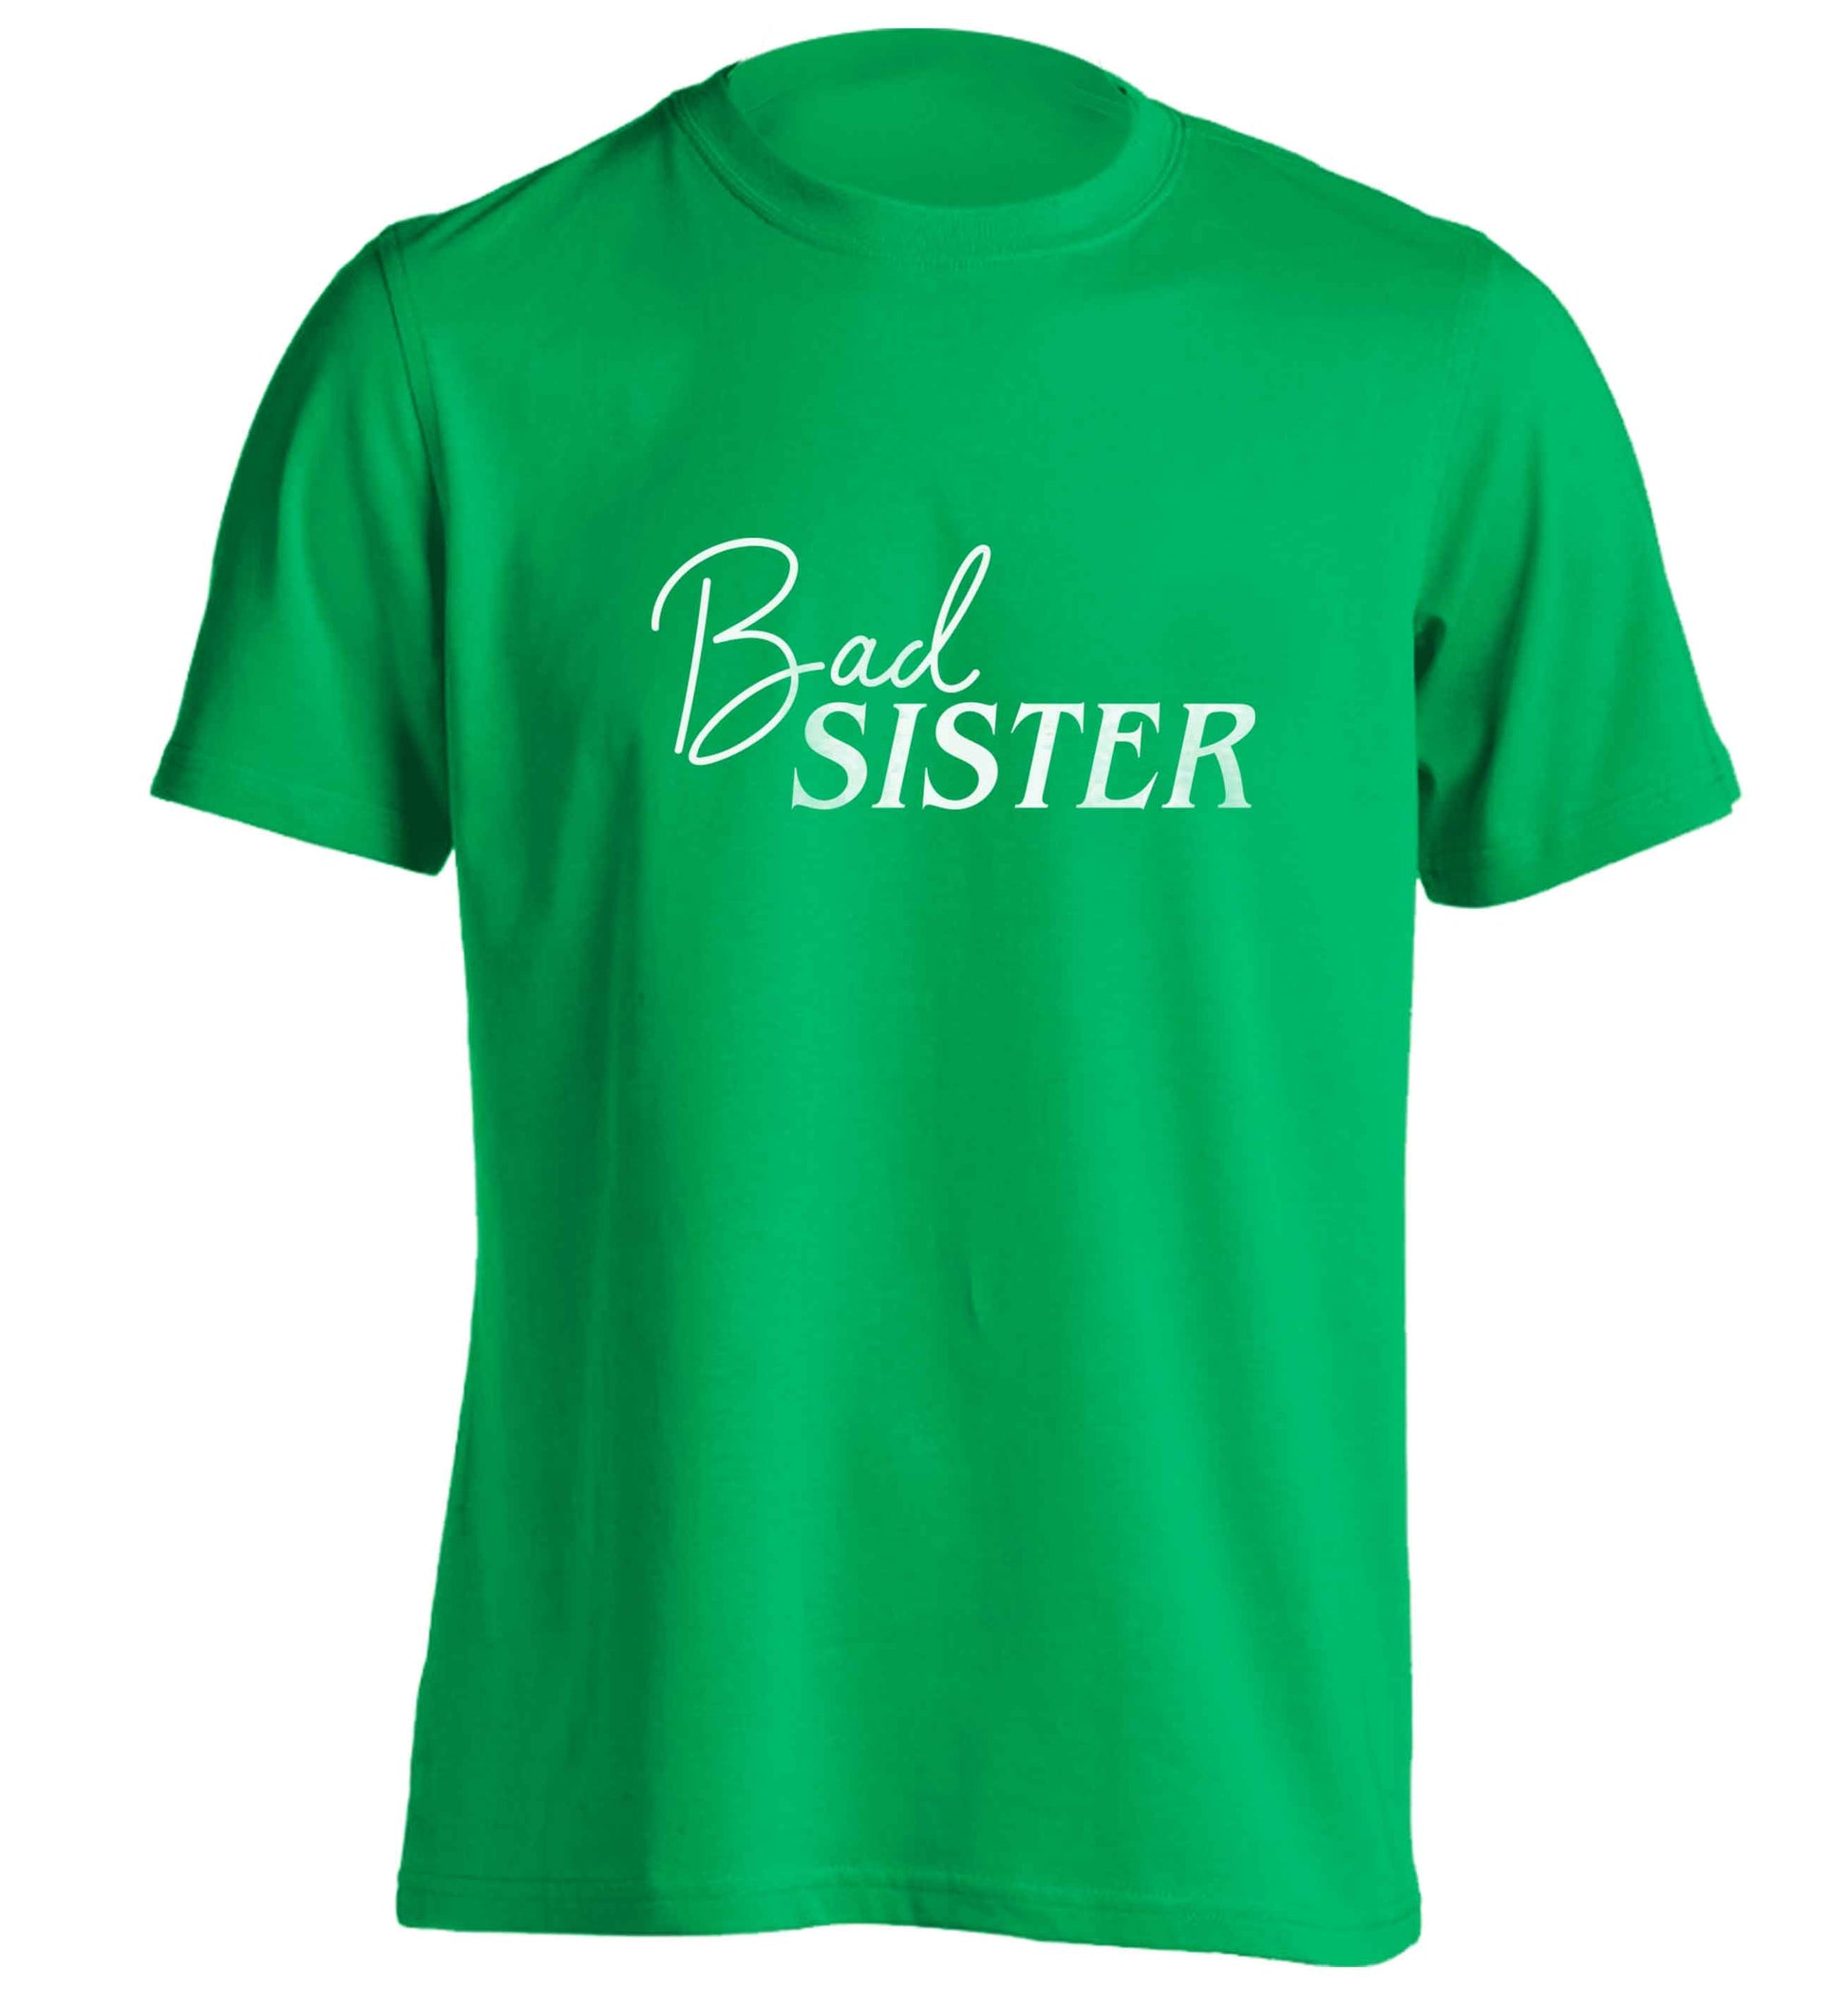 Bad sister adults unisex green Tshirt 2XL